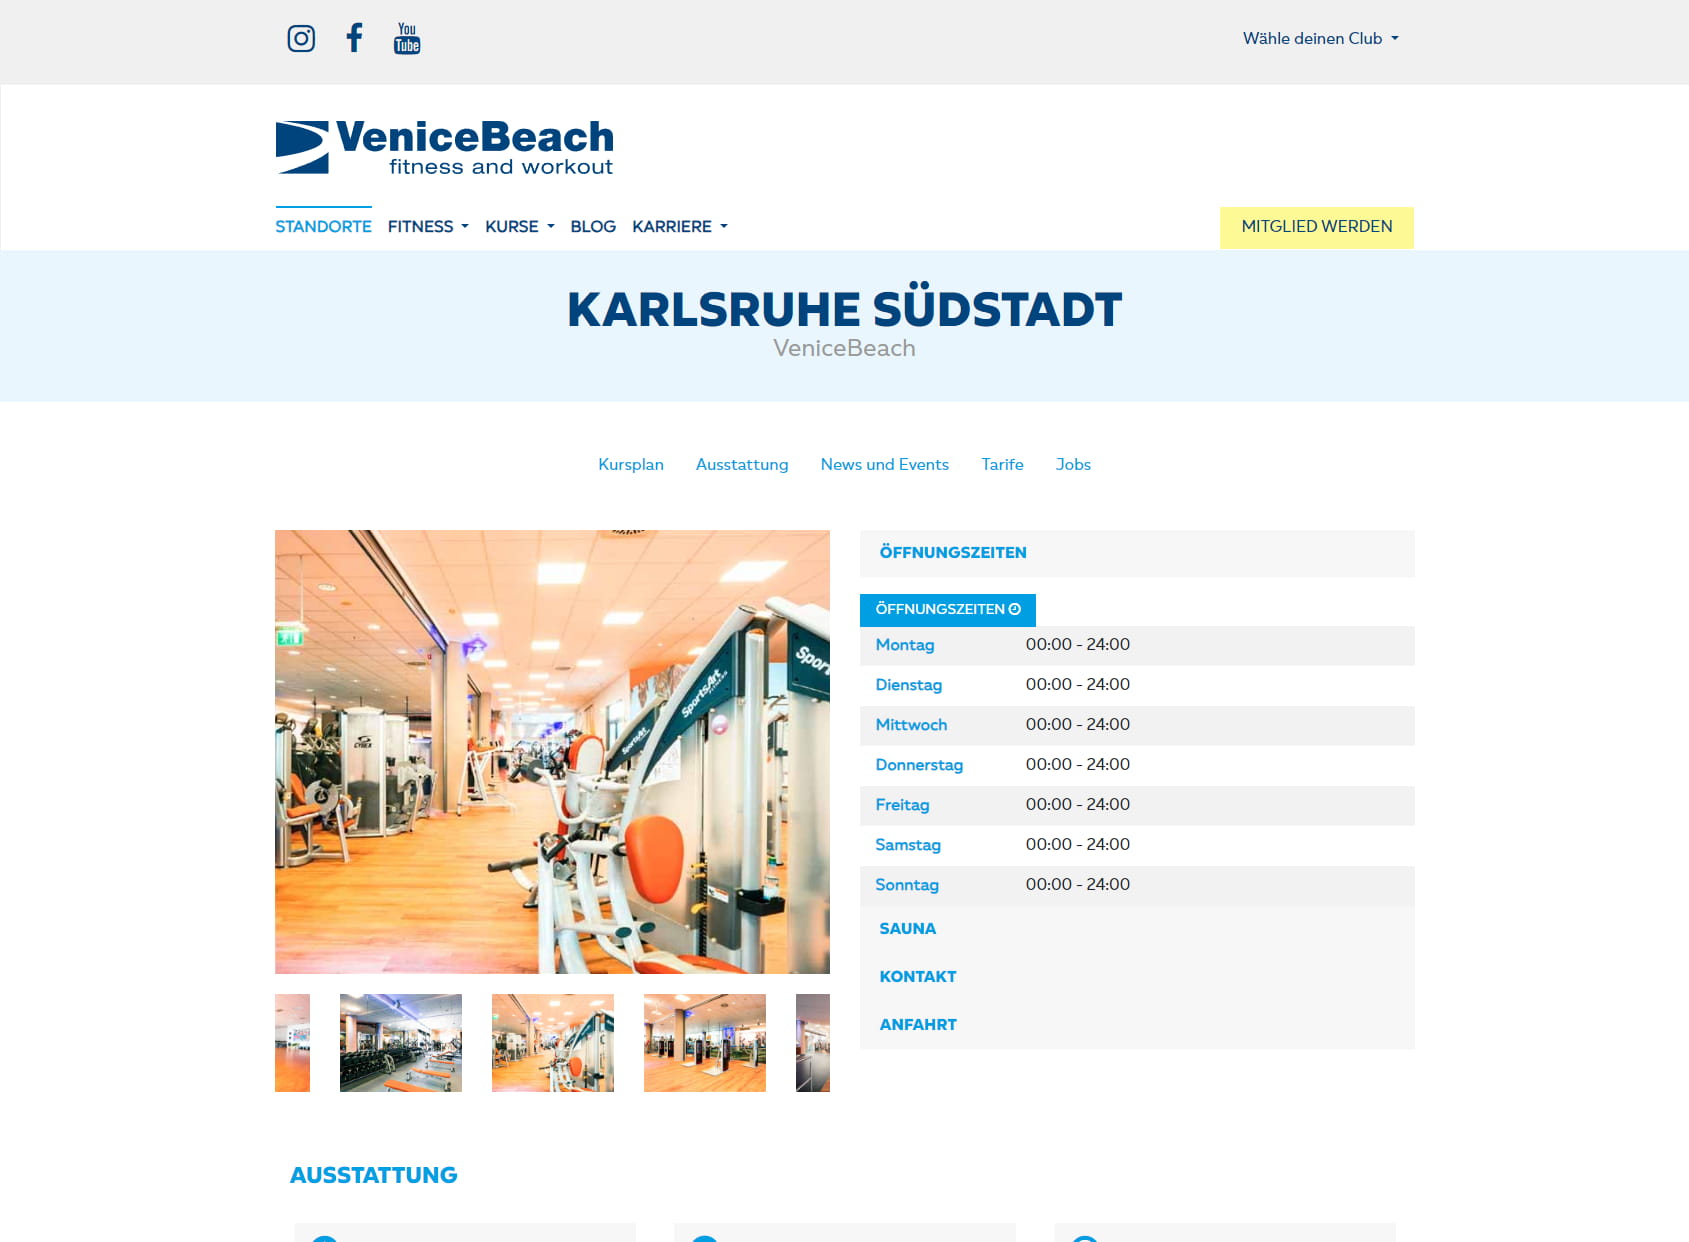 VeniceBeach Karlsruhe Südstadt